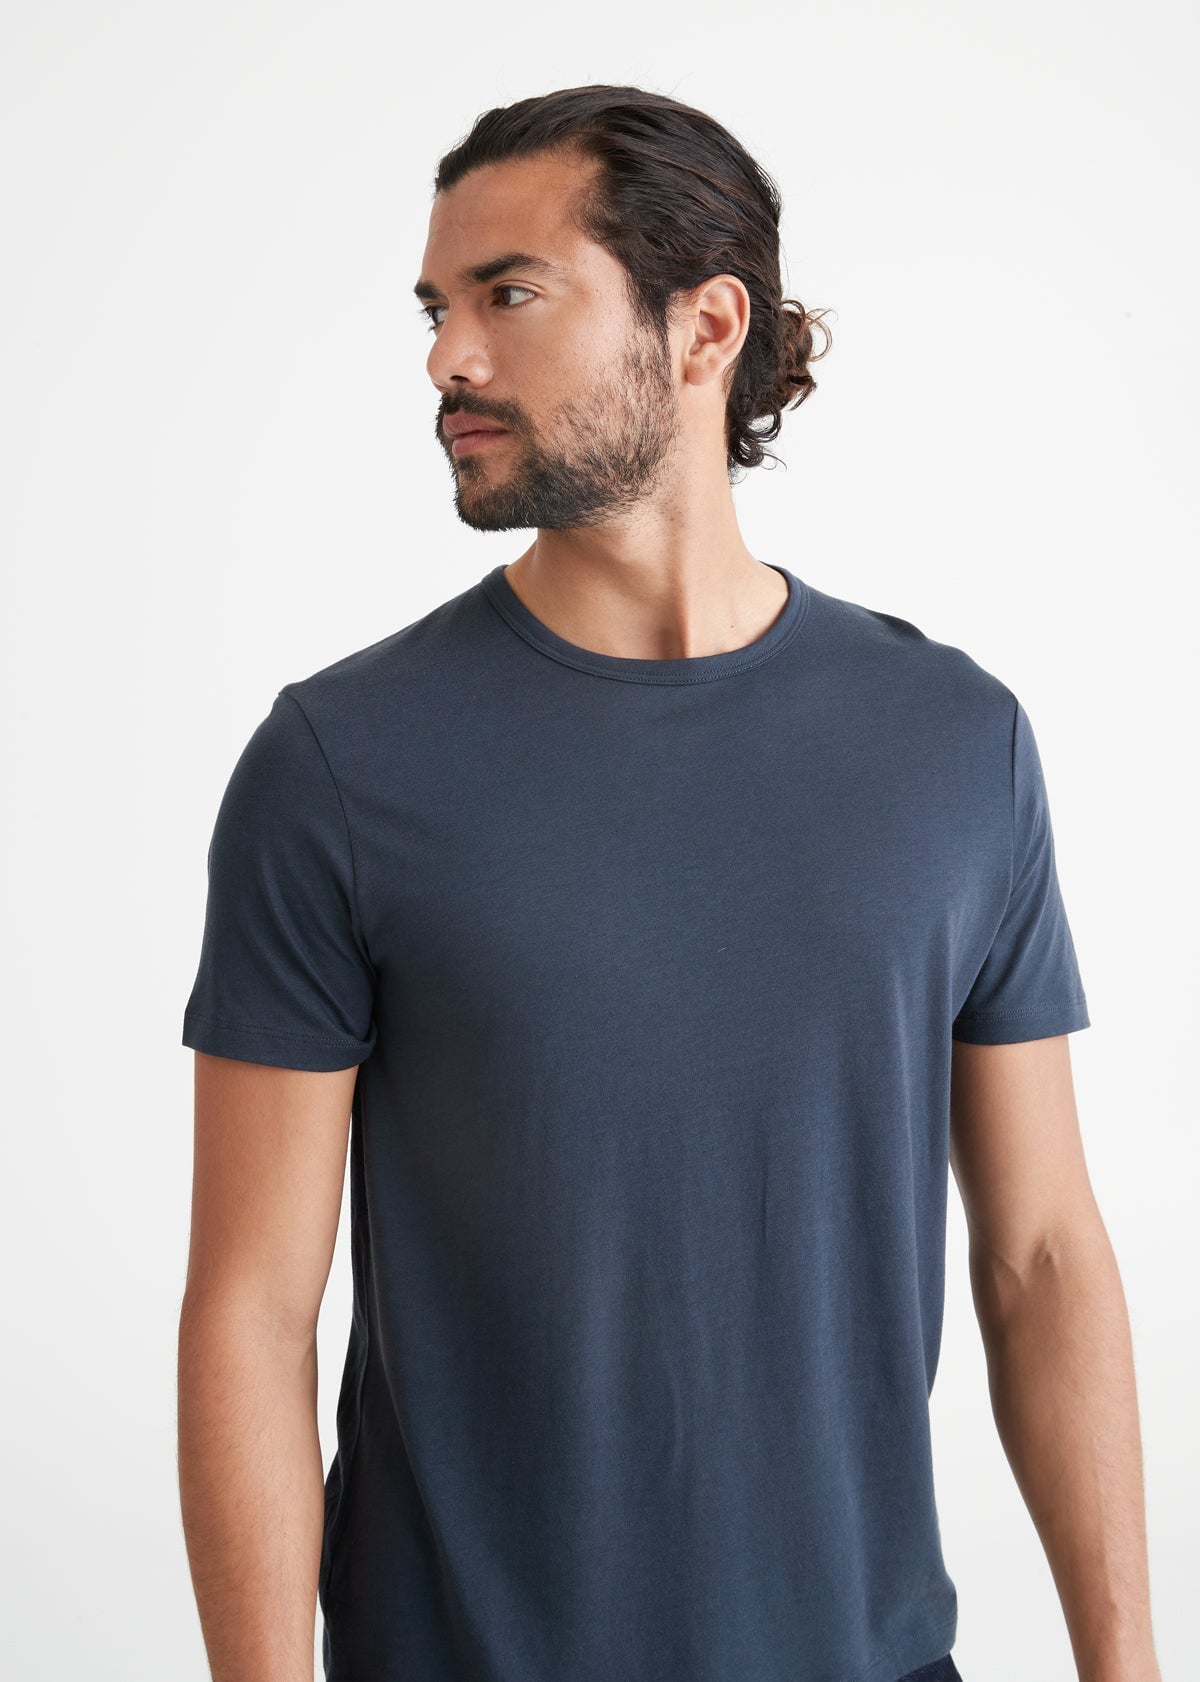 men's soft lightweight navy blue tshirt side